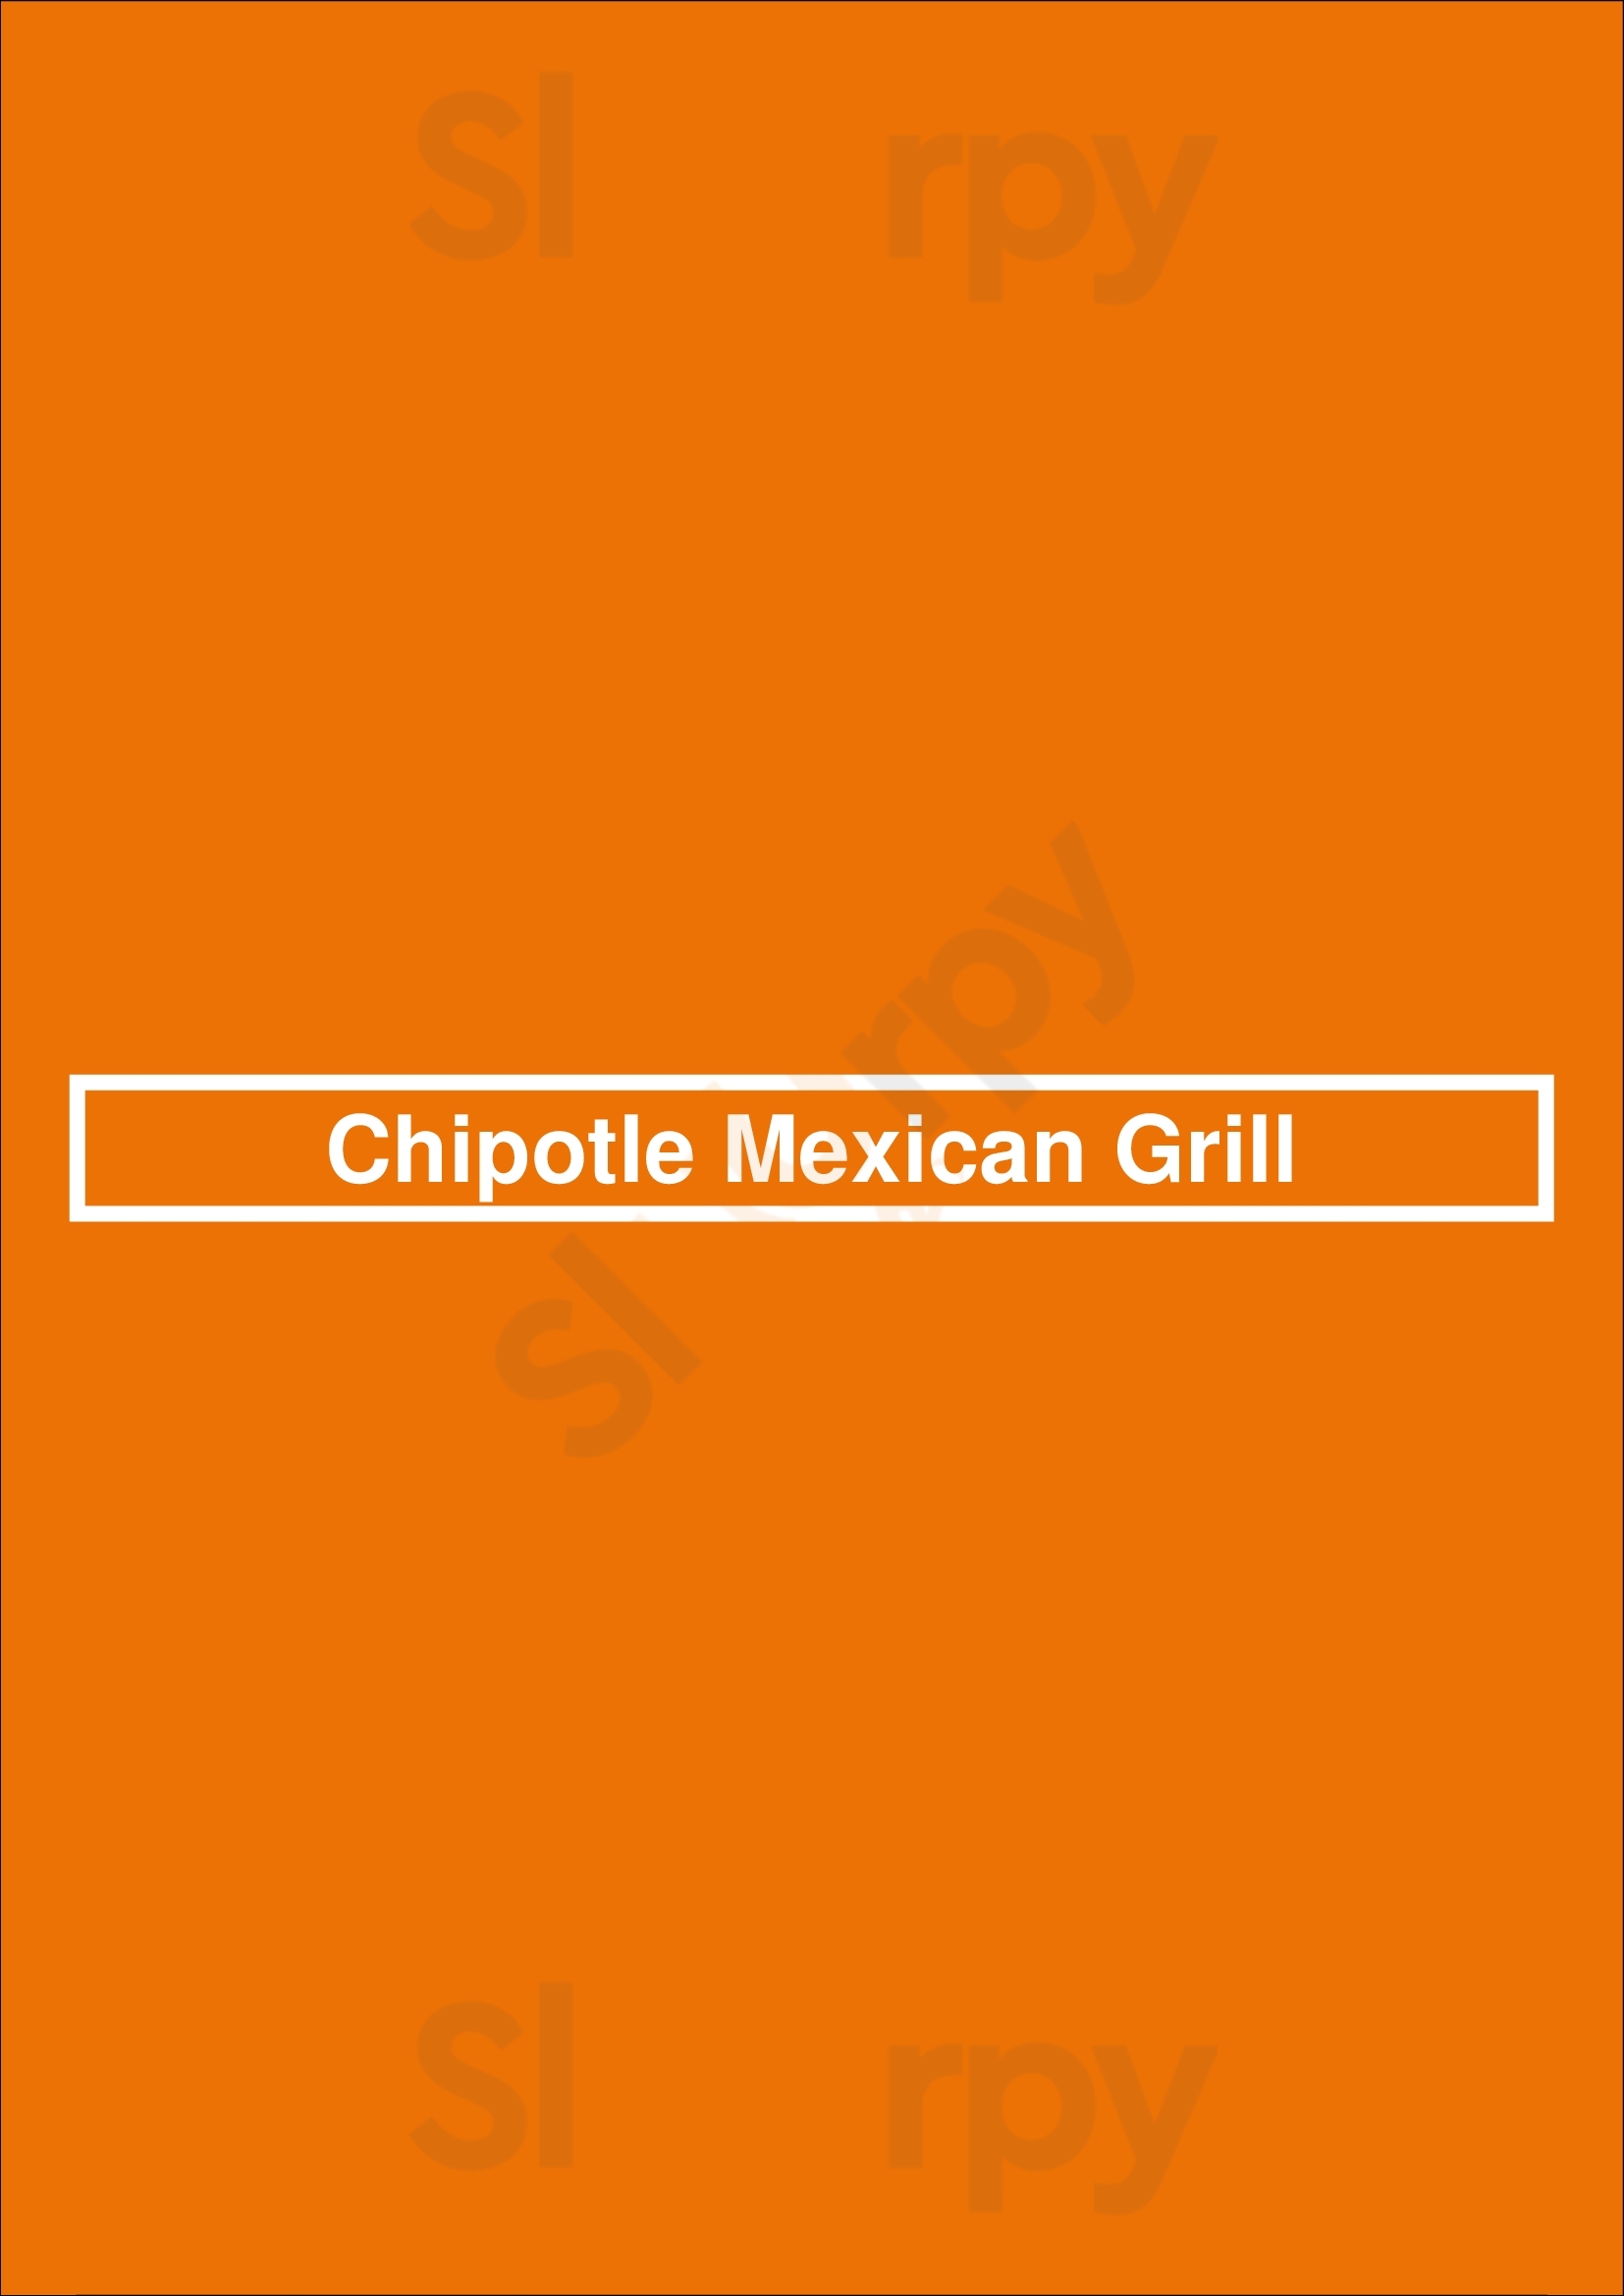 Chipotle Mexican Grill London Menu - 1